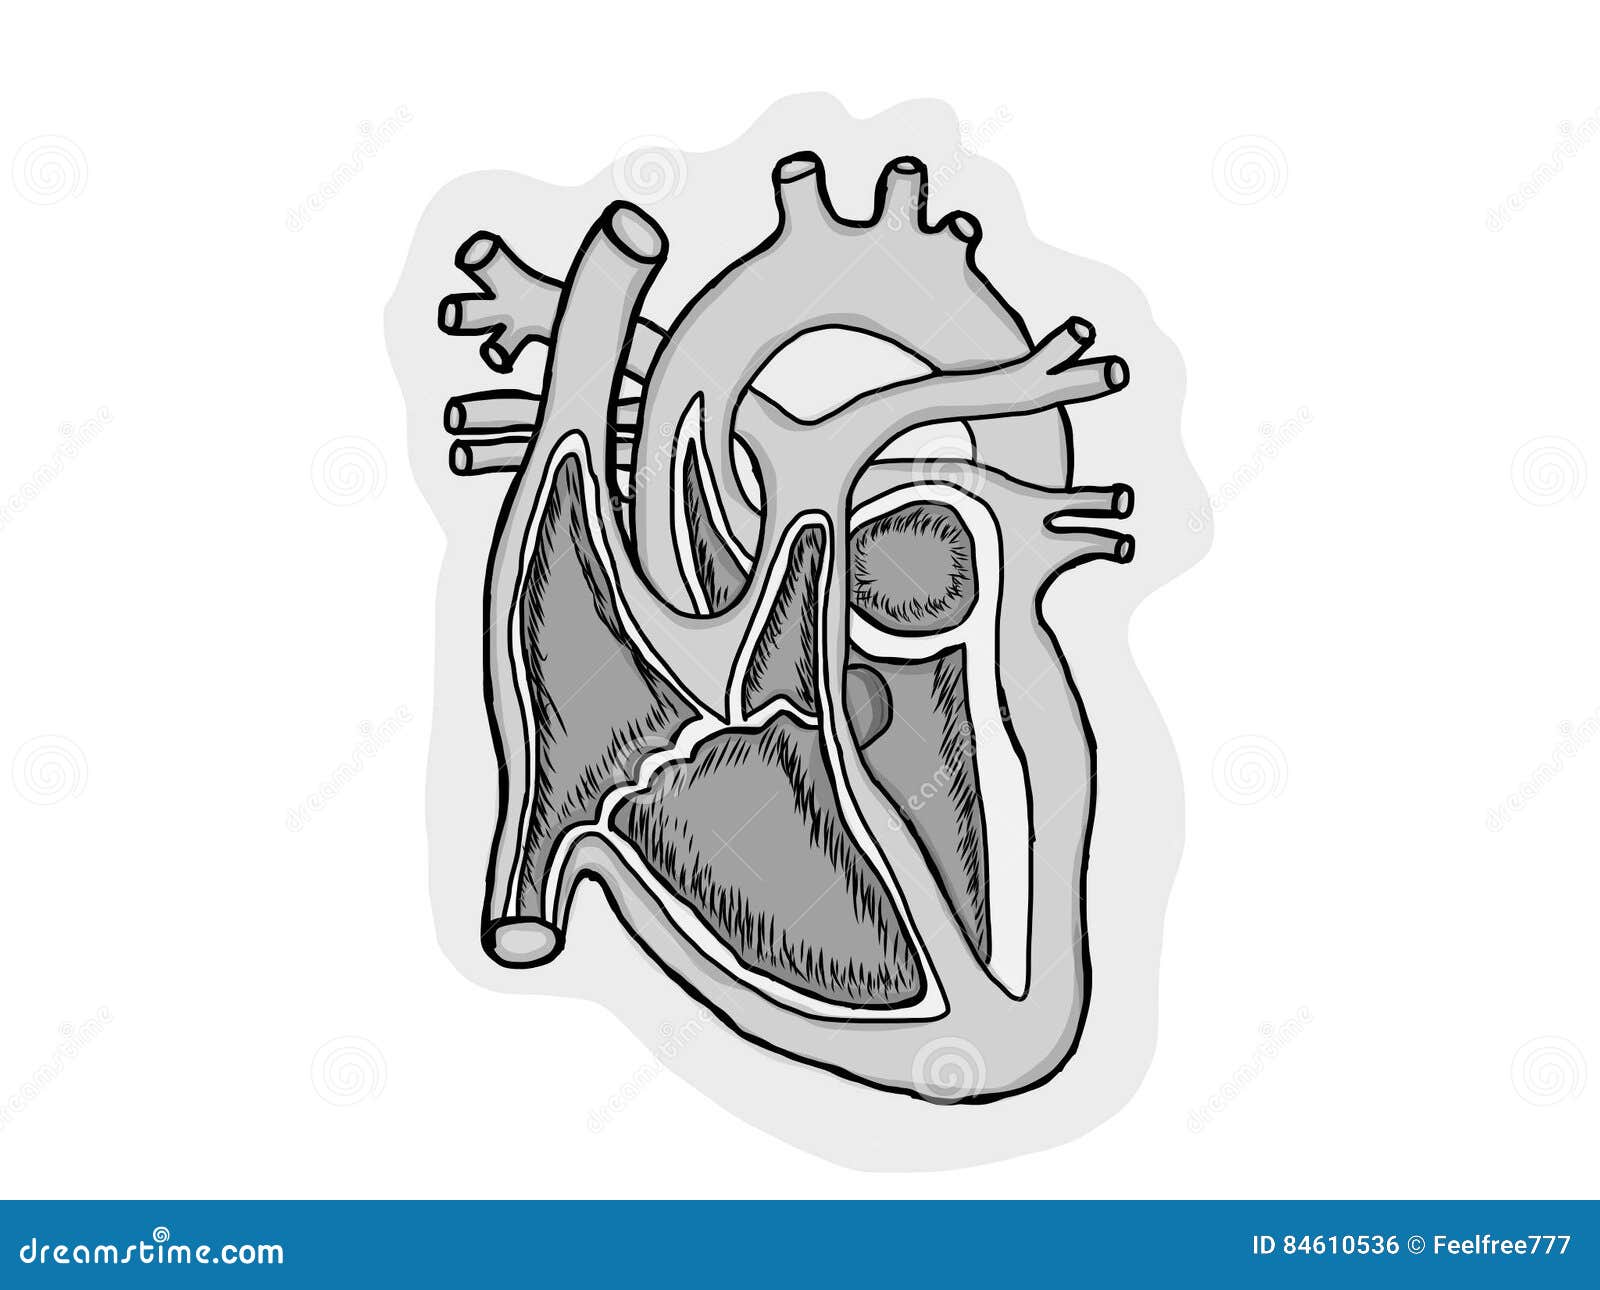 heart in cut human anatomy scheme